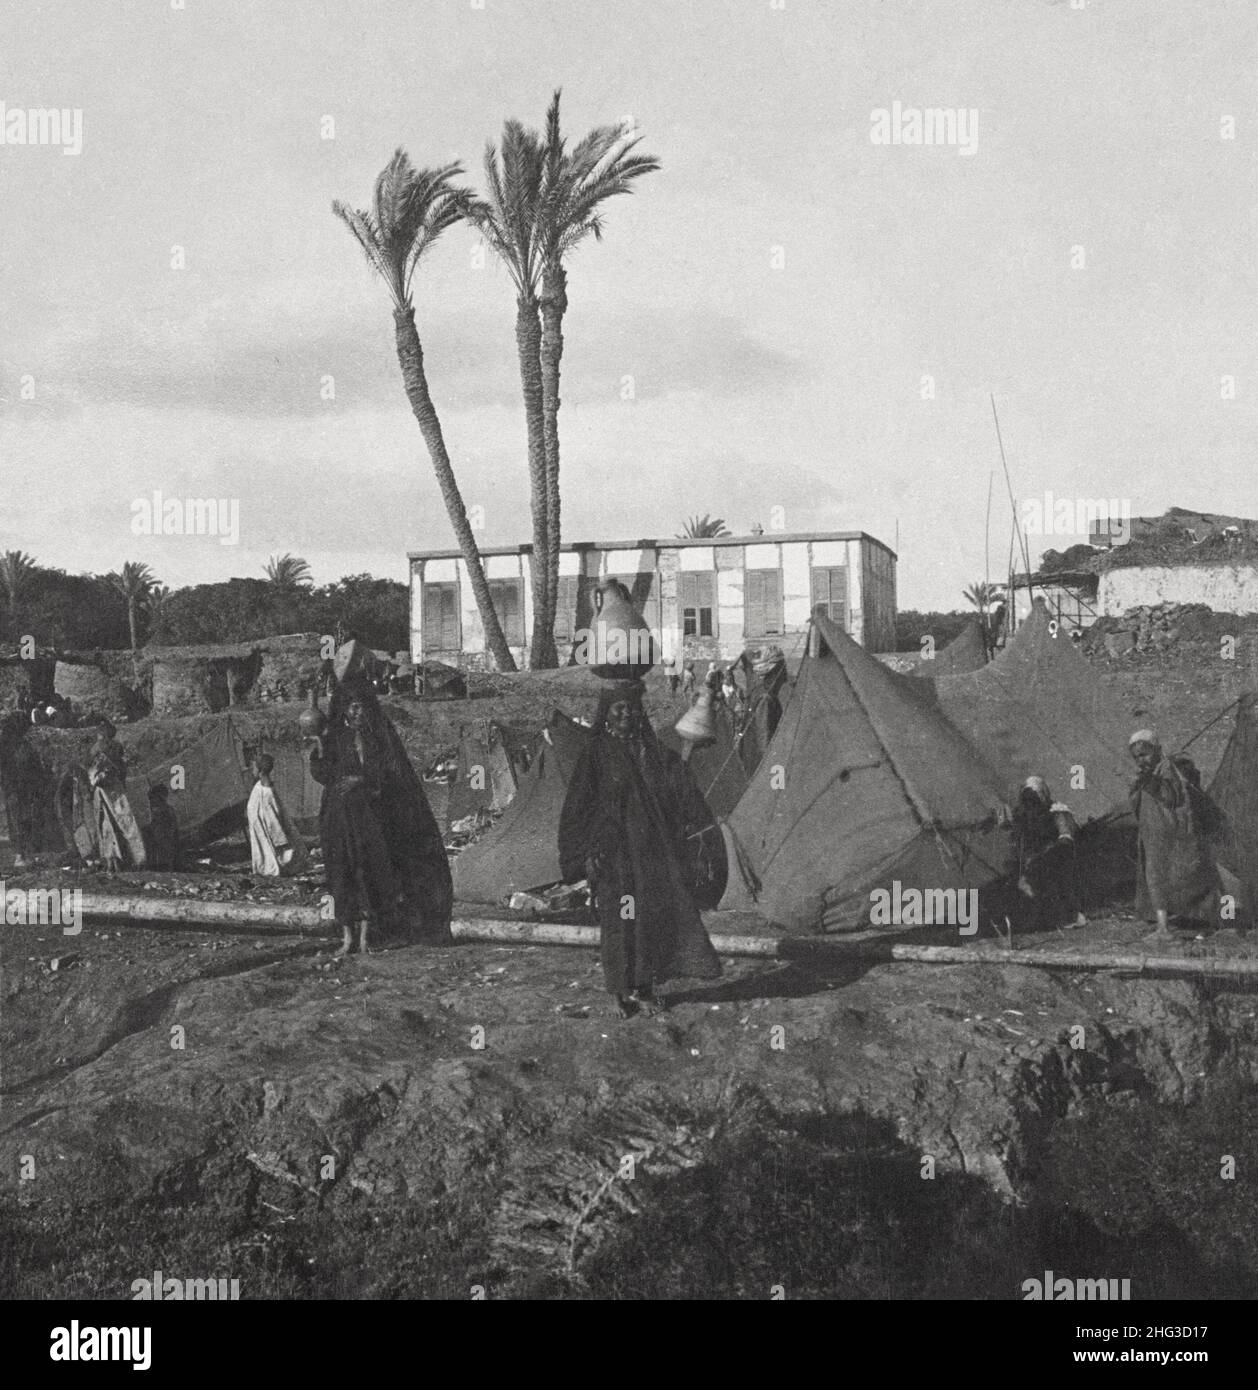 Vintage photo of an Arab village on the Nile, Egypt. 1901 Stock Photo